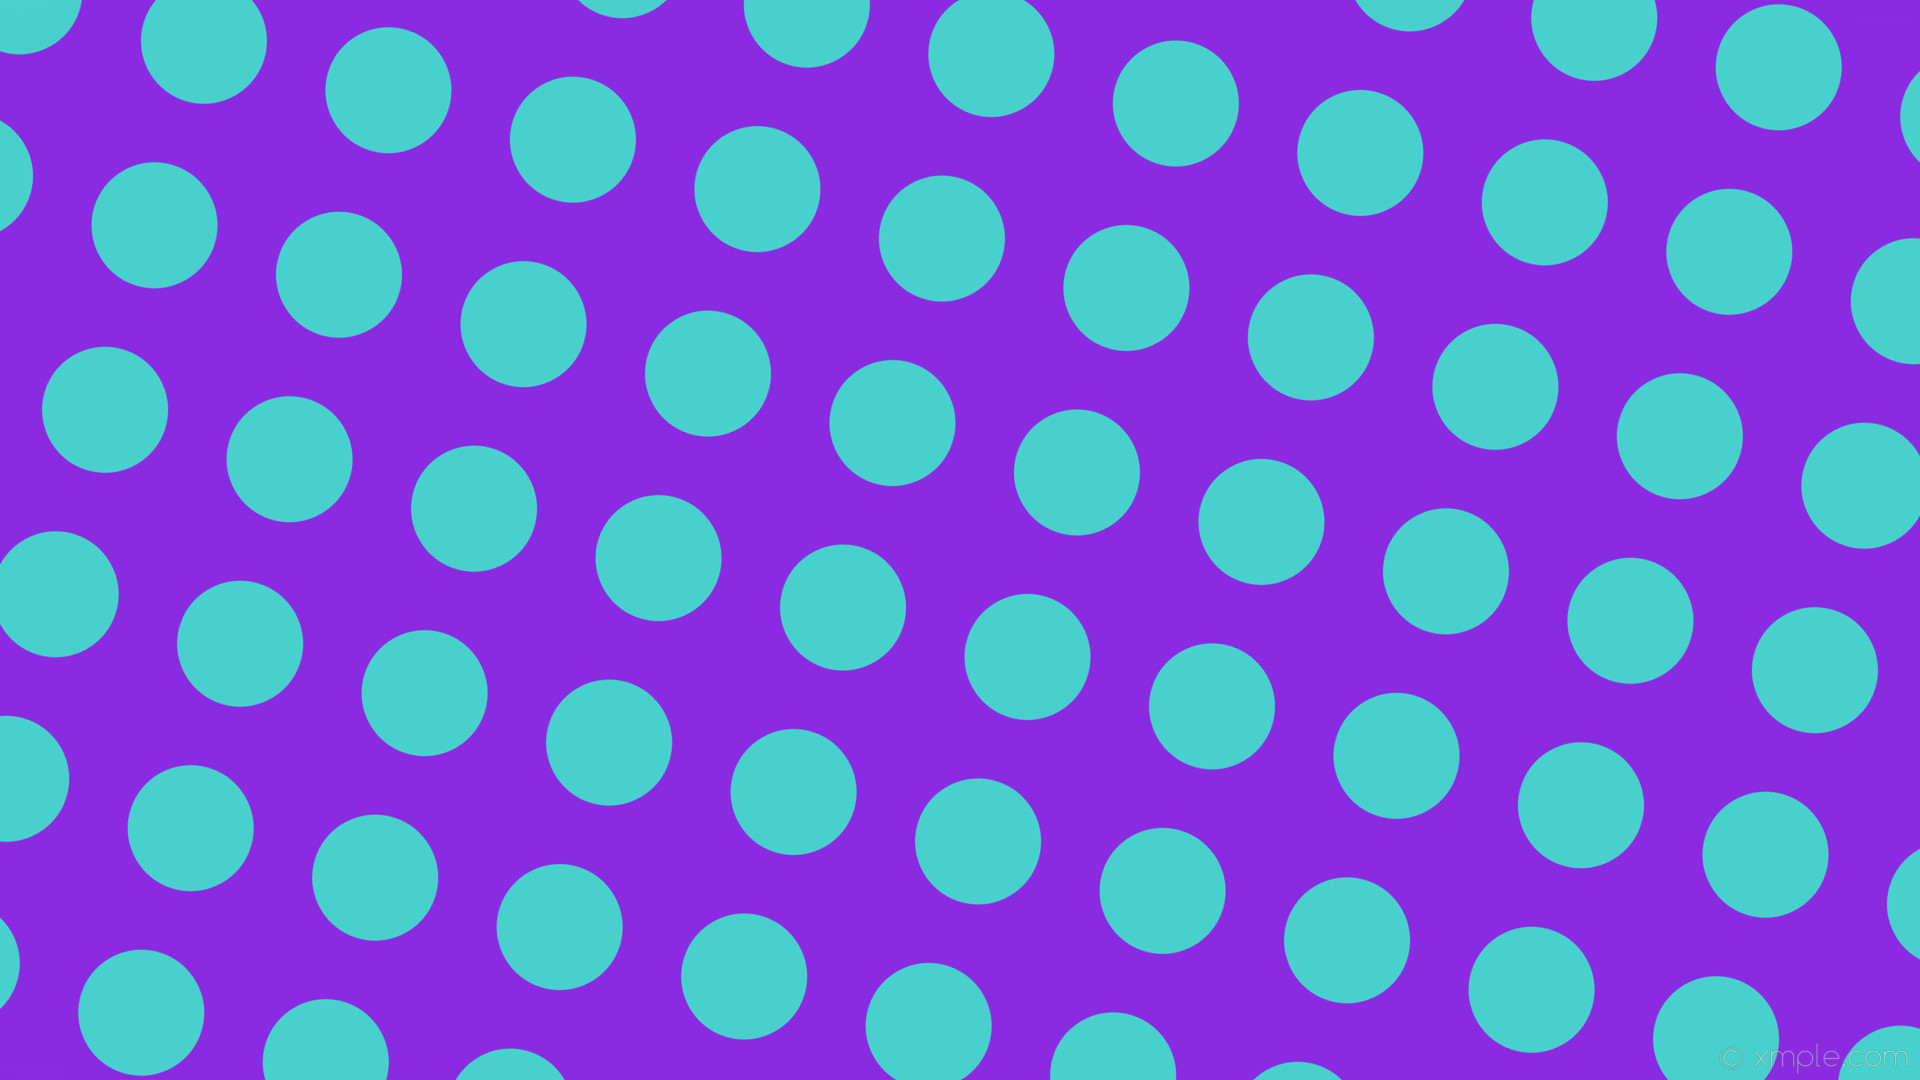 1920x1080 wallpaper dots spots blue purple polka blue violet medium turquoise #8a2be2  #48d1cc 165Â°